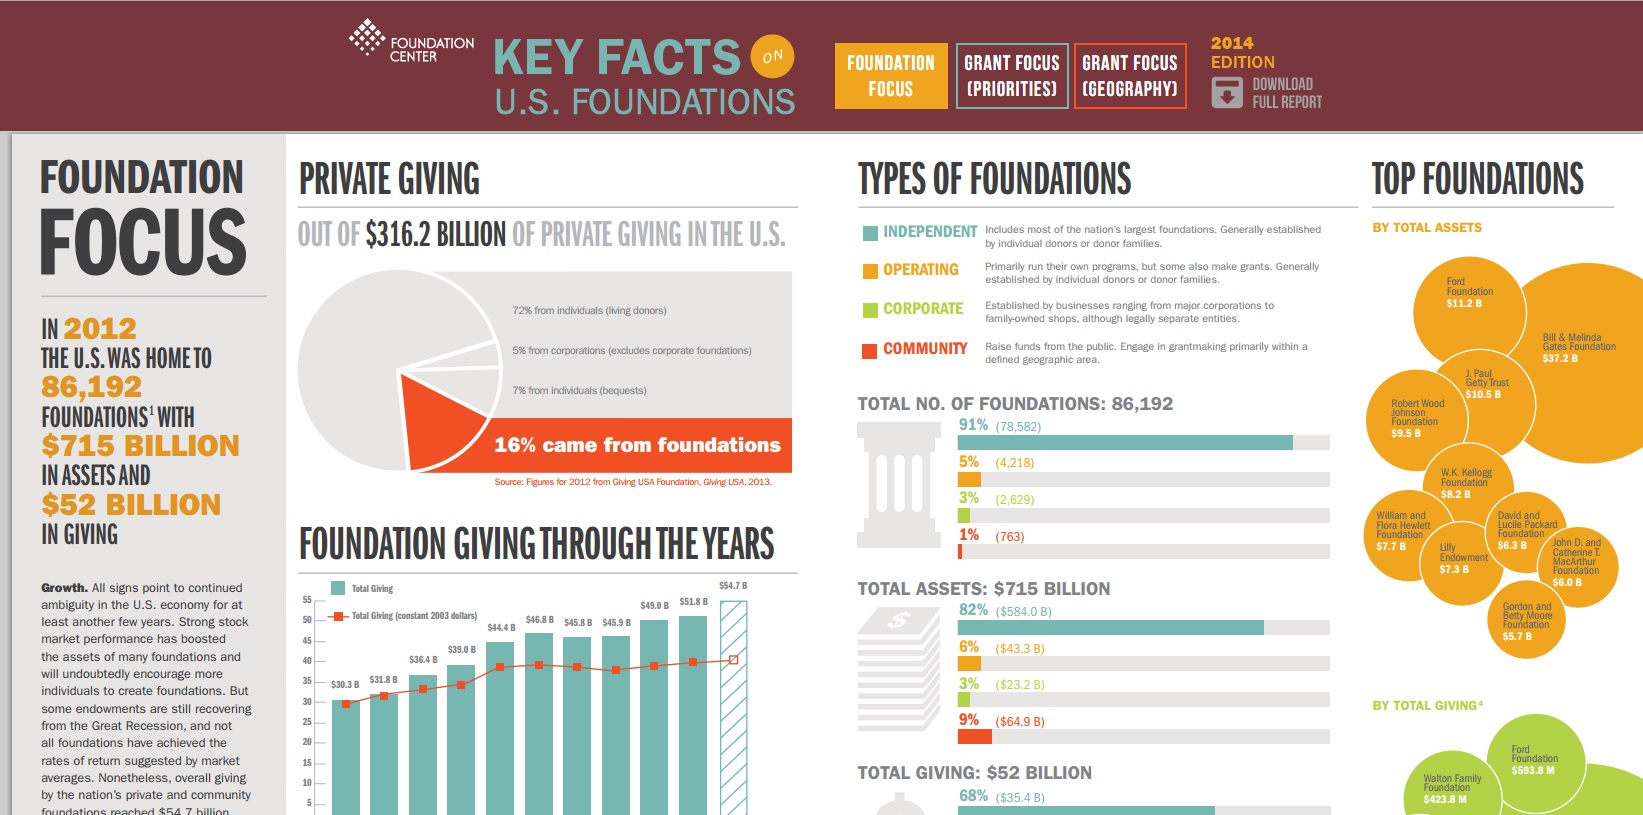 Key Facts on U.S. Foundations